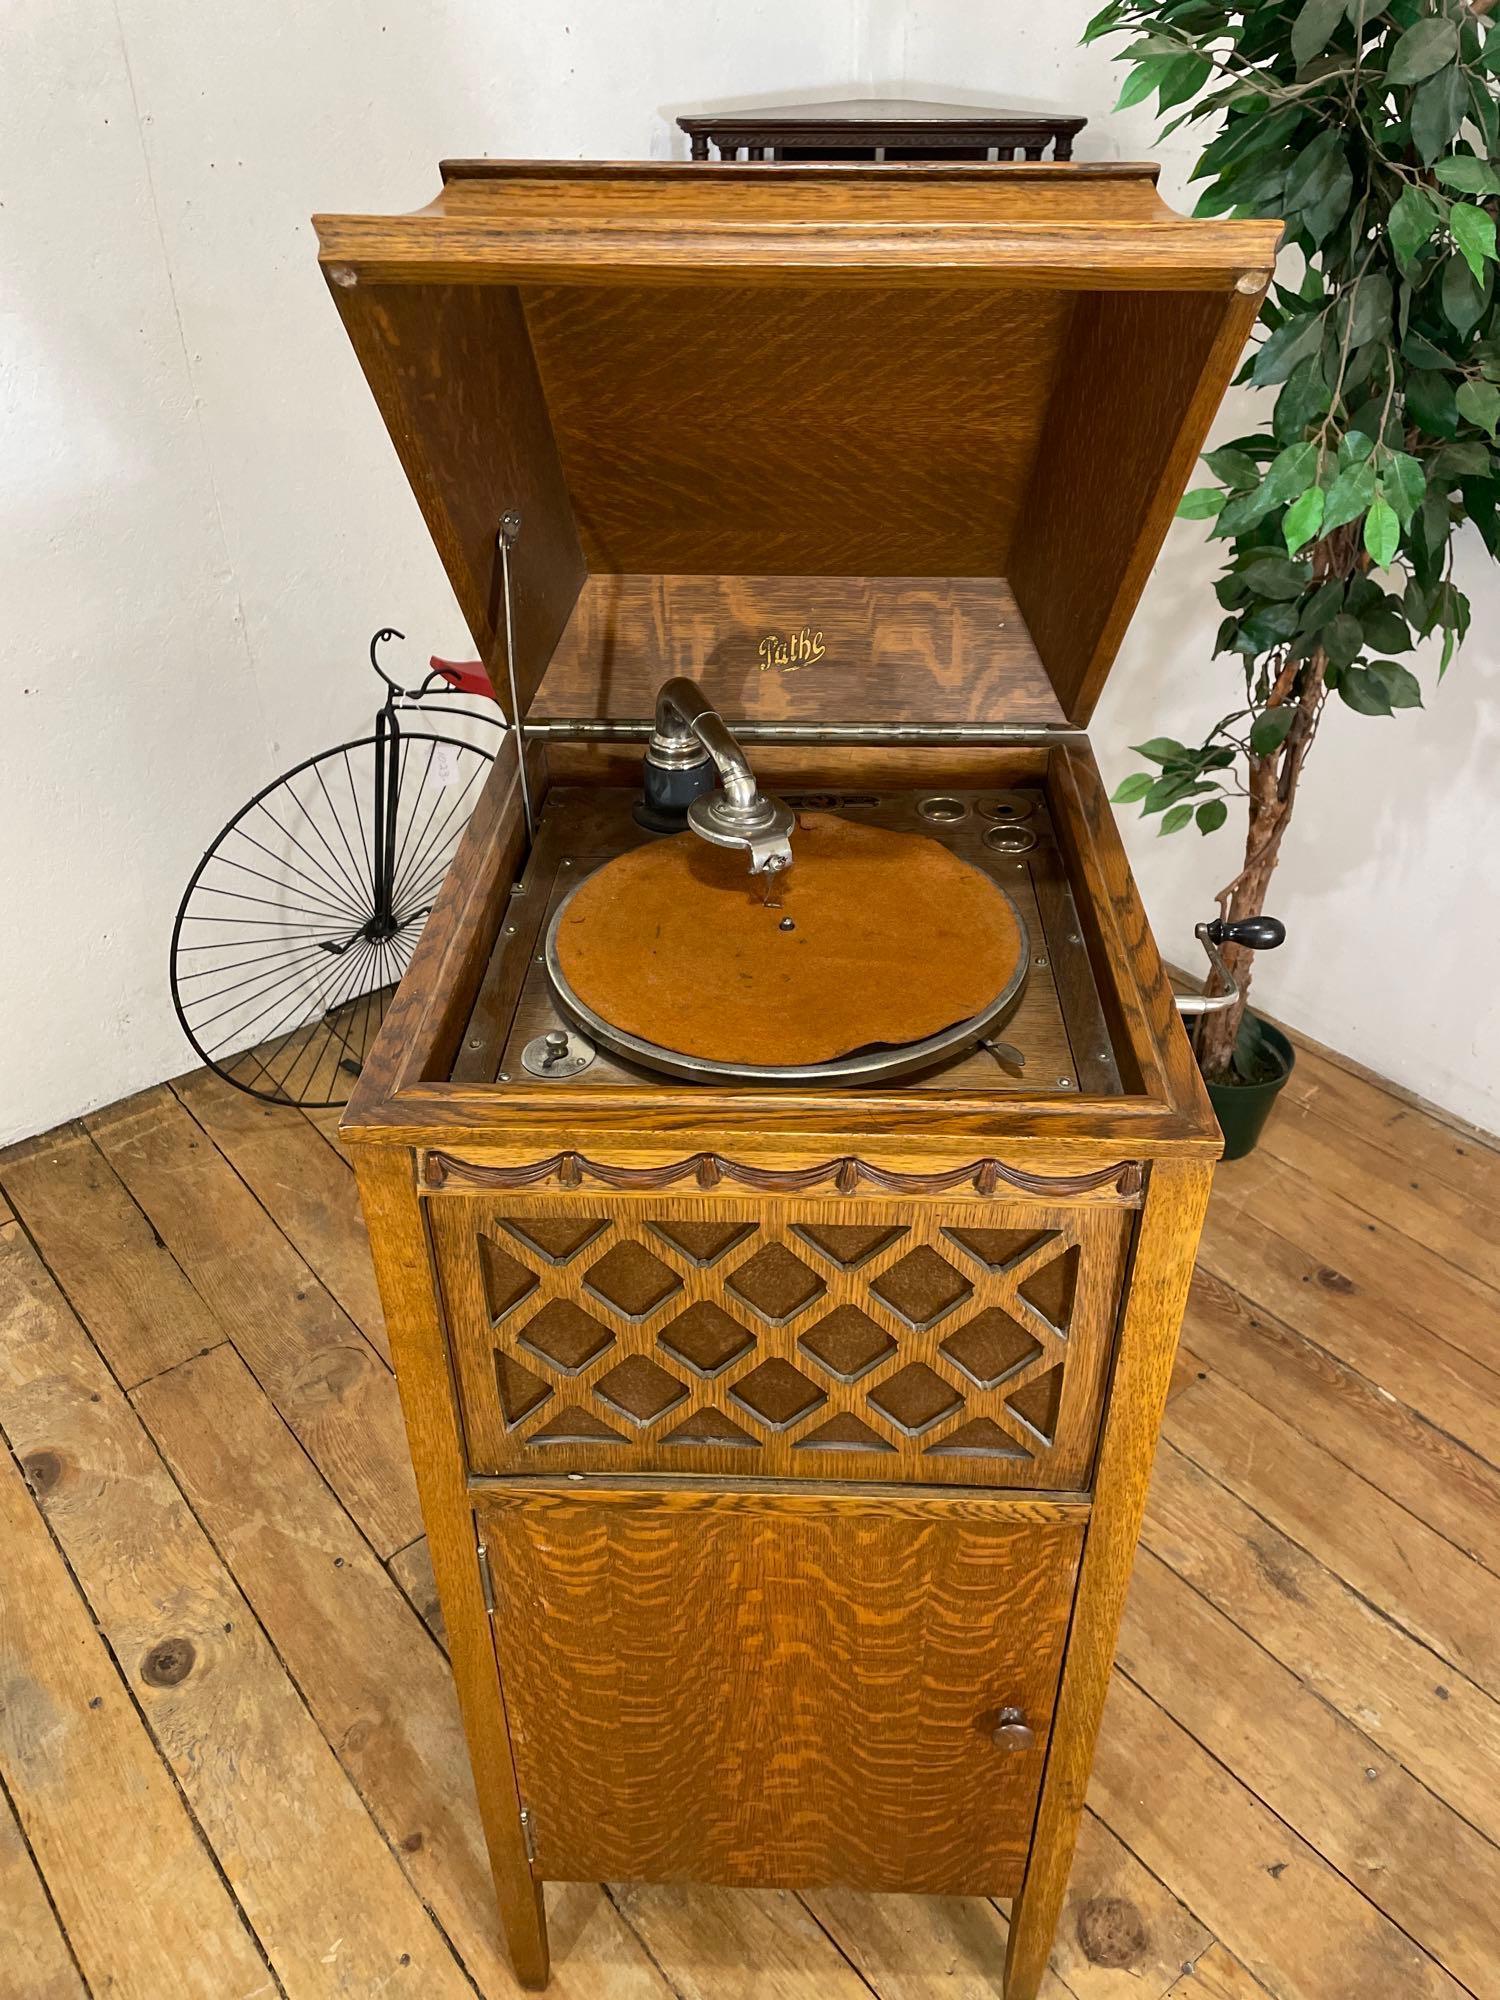 Pathe Freres, Model VII, crank Phonograph, oak cabinet.